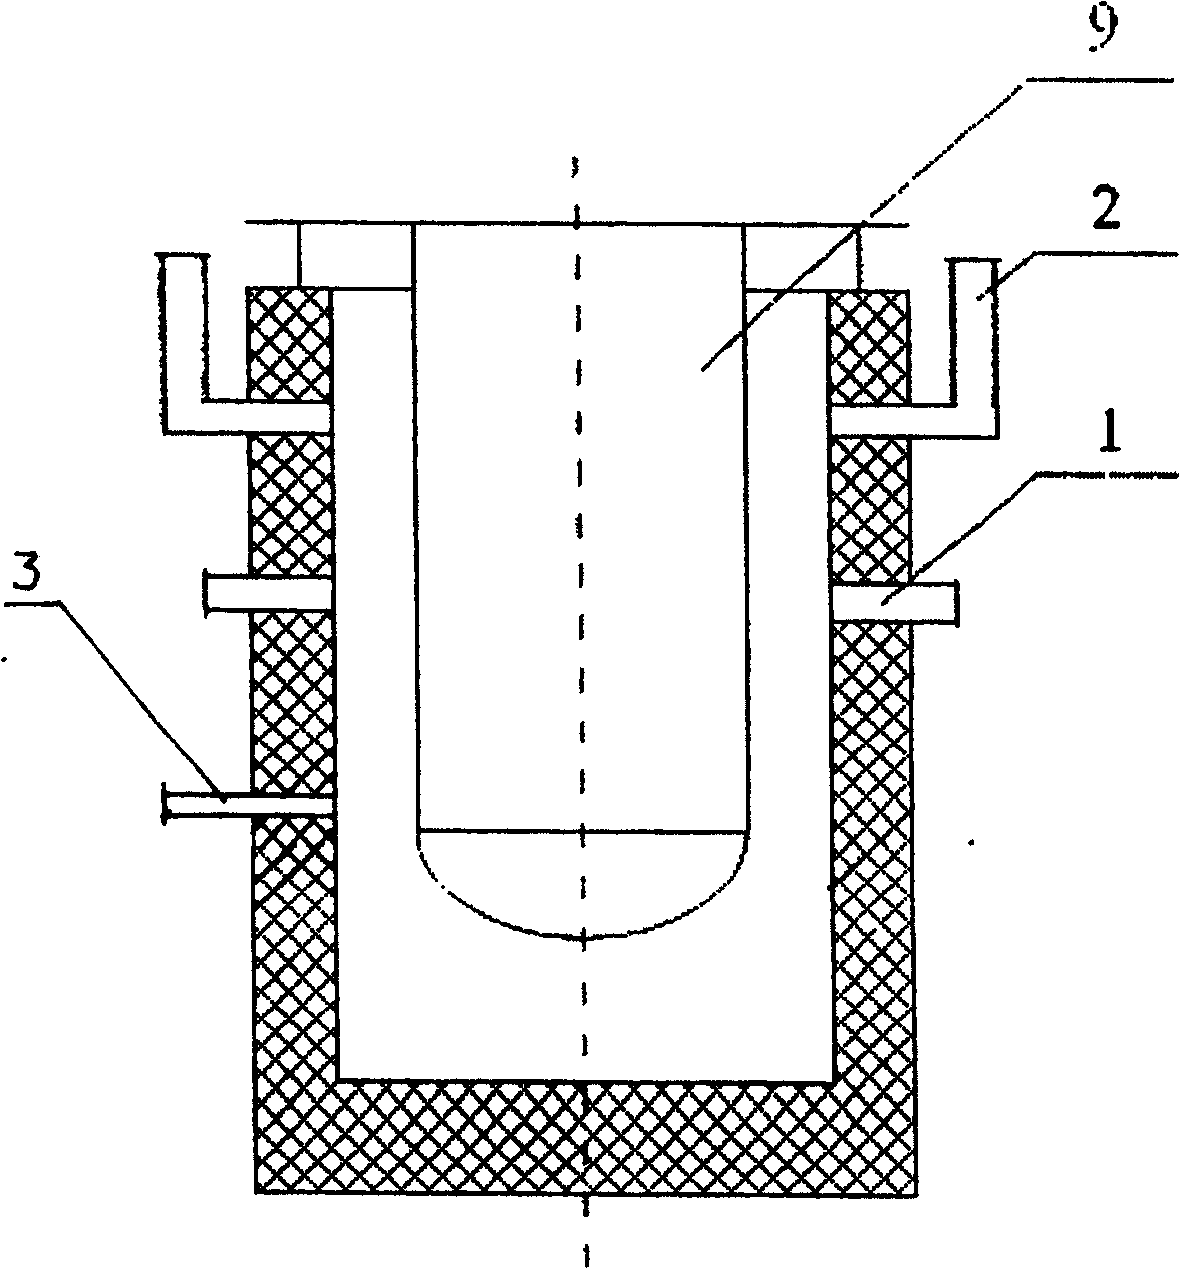 Heater furnace to produce titanium sponge by combination method